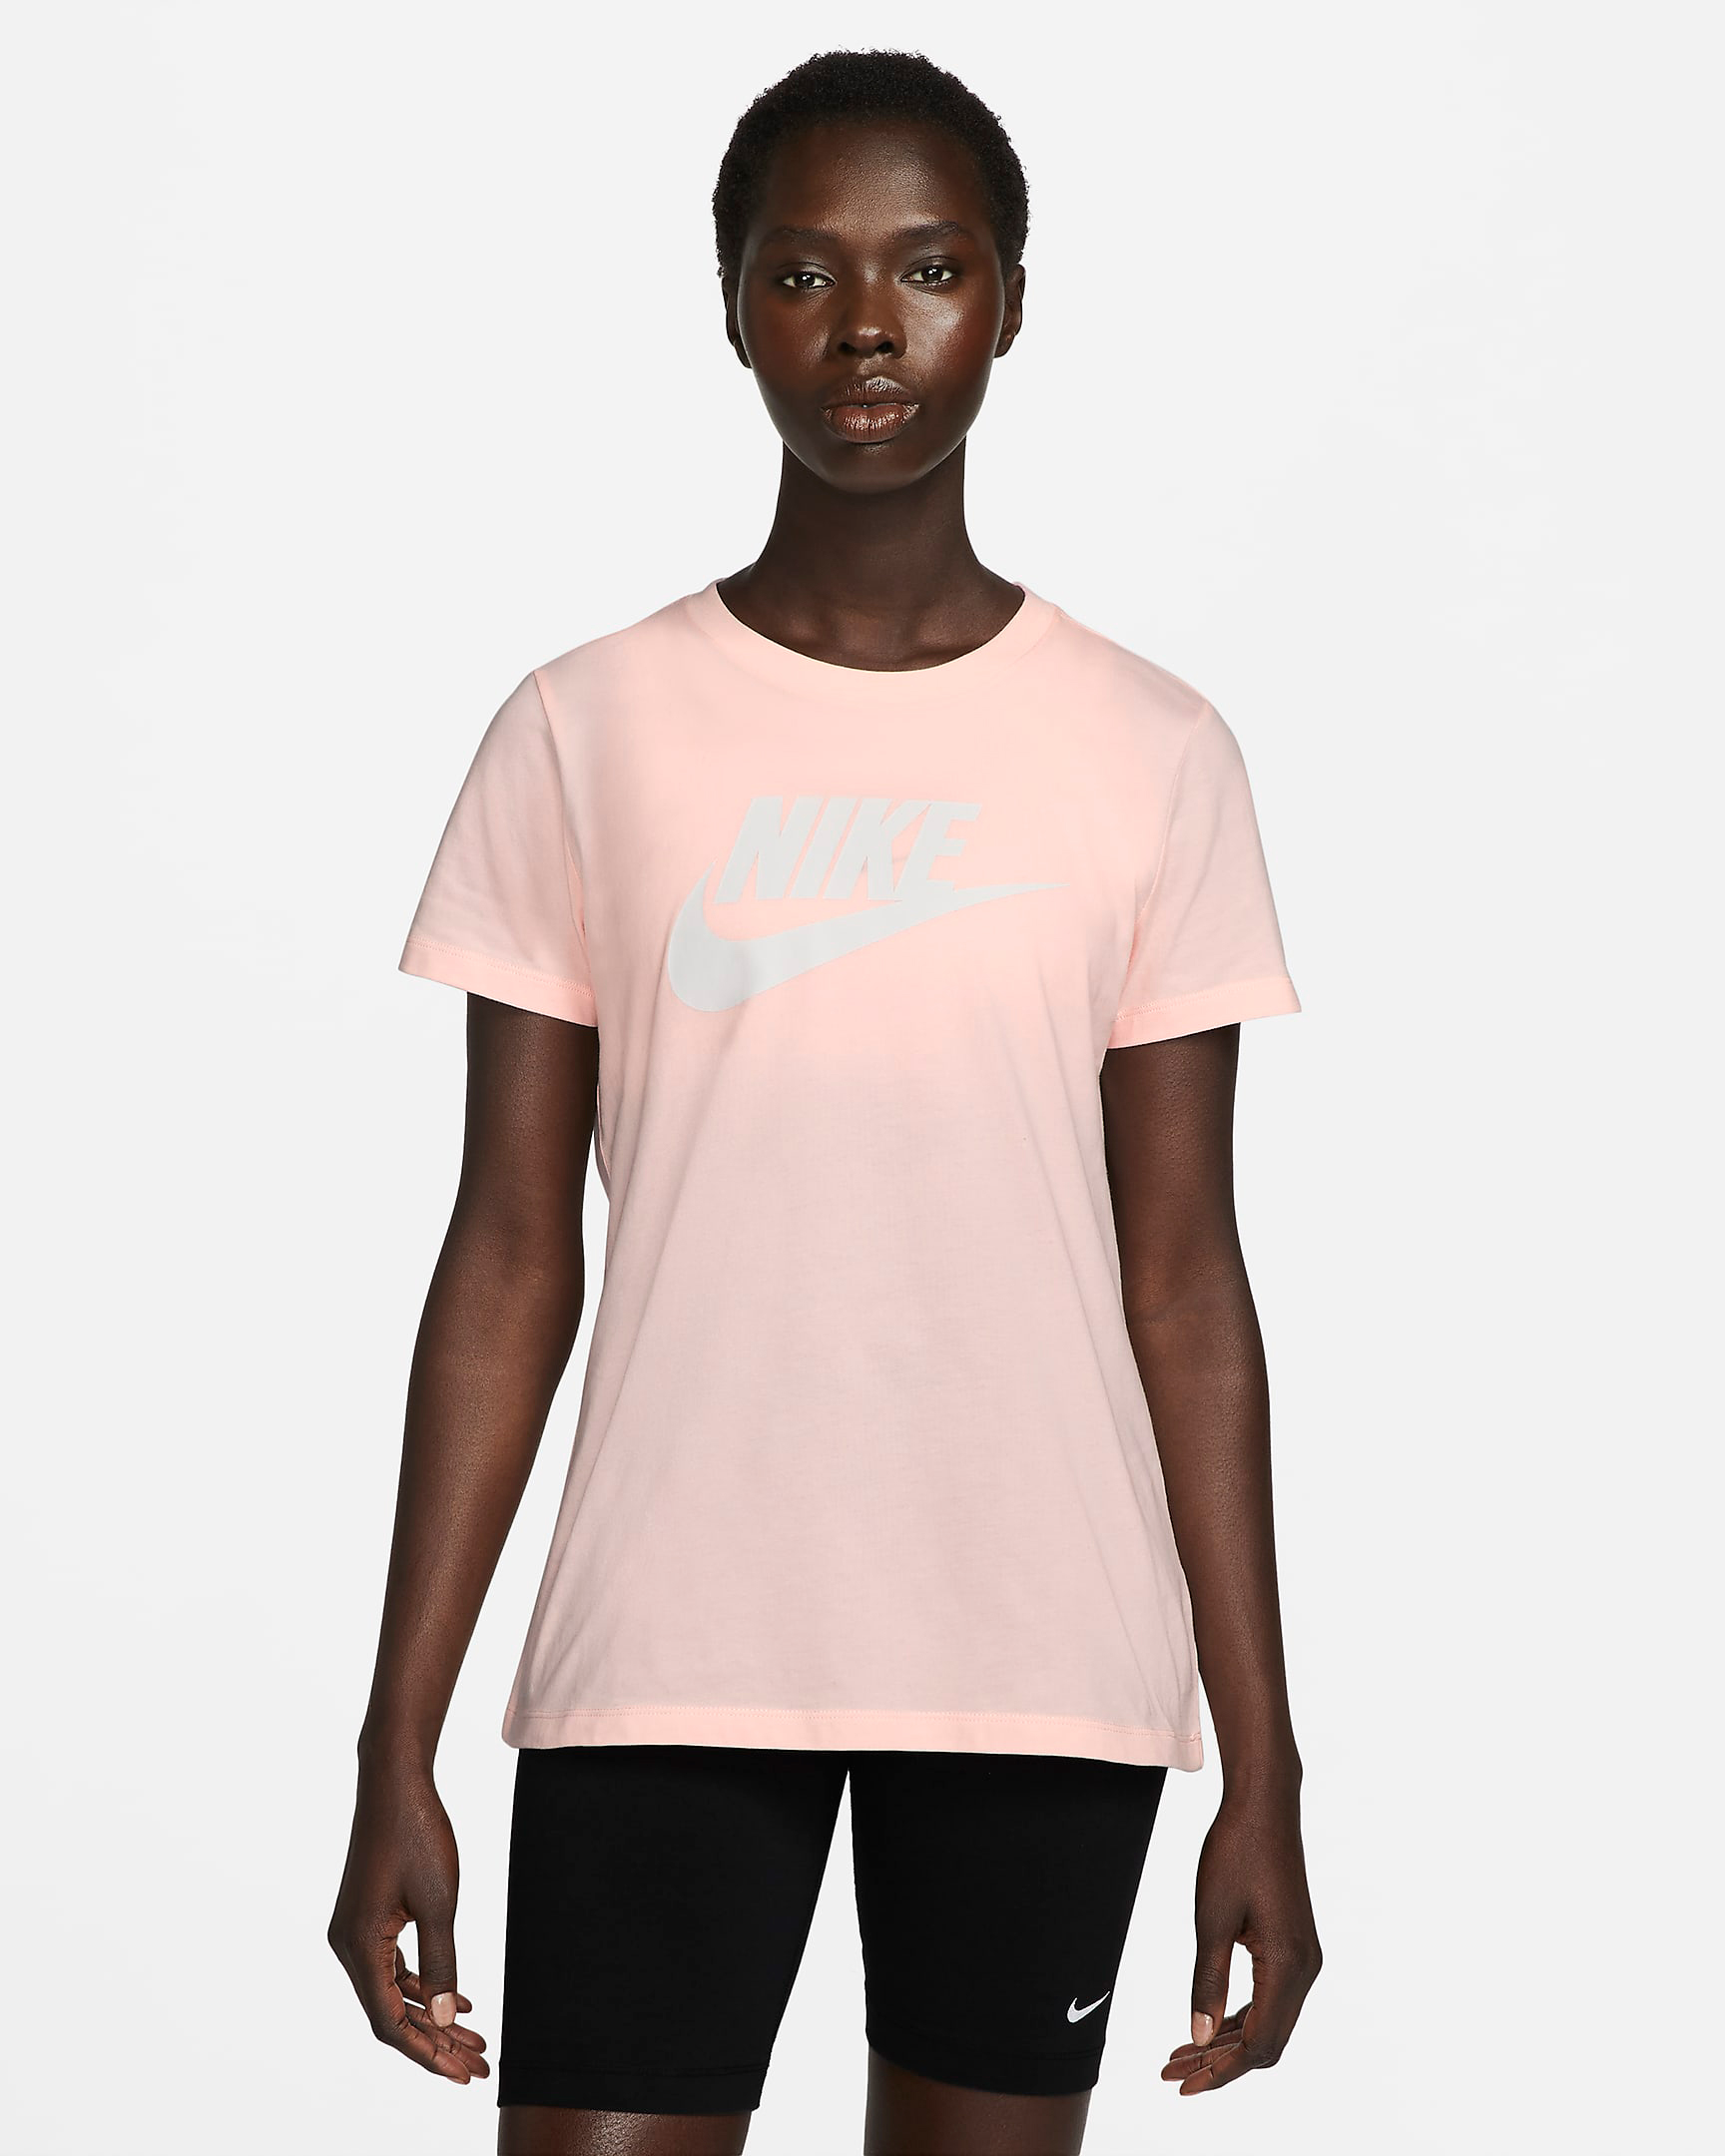 nike-womens-atmosphere-pink-tee-shirt